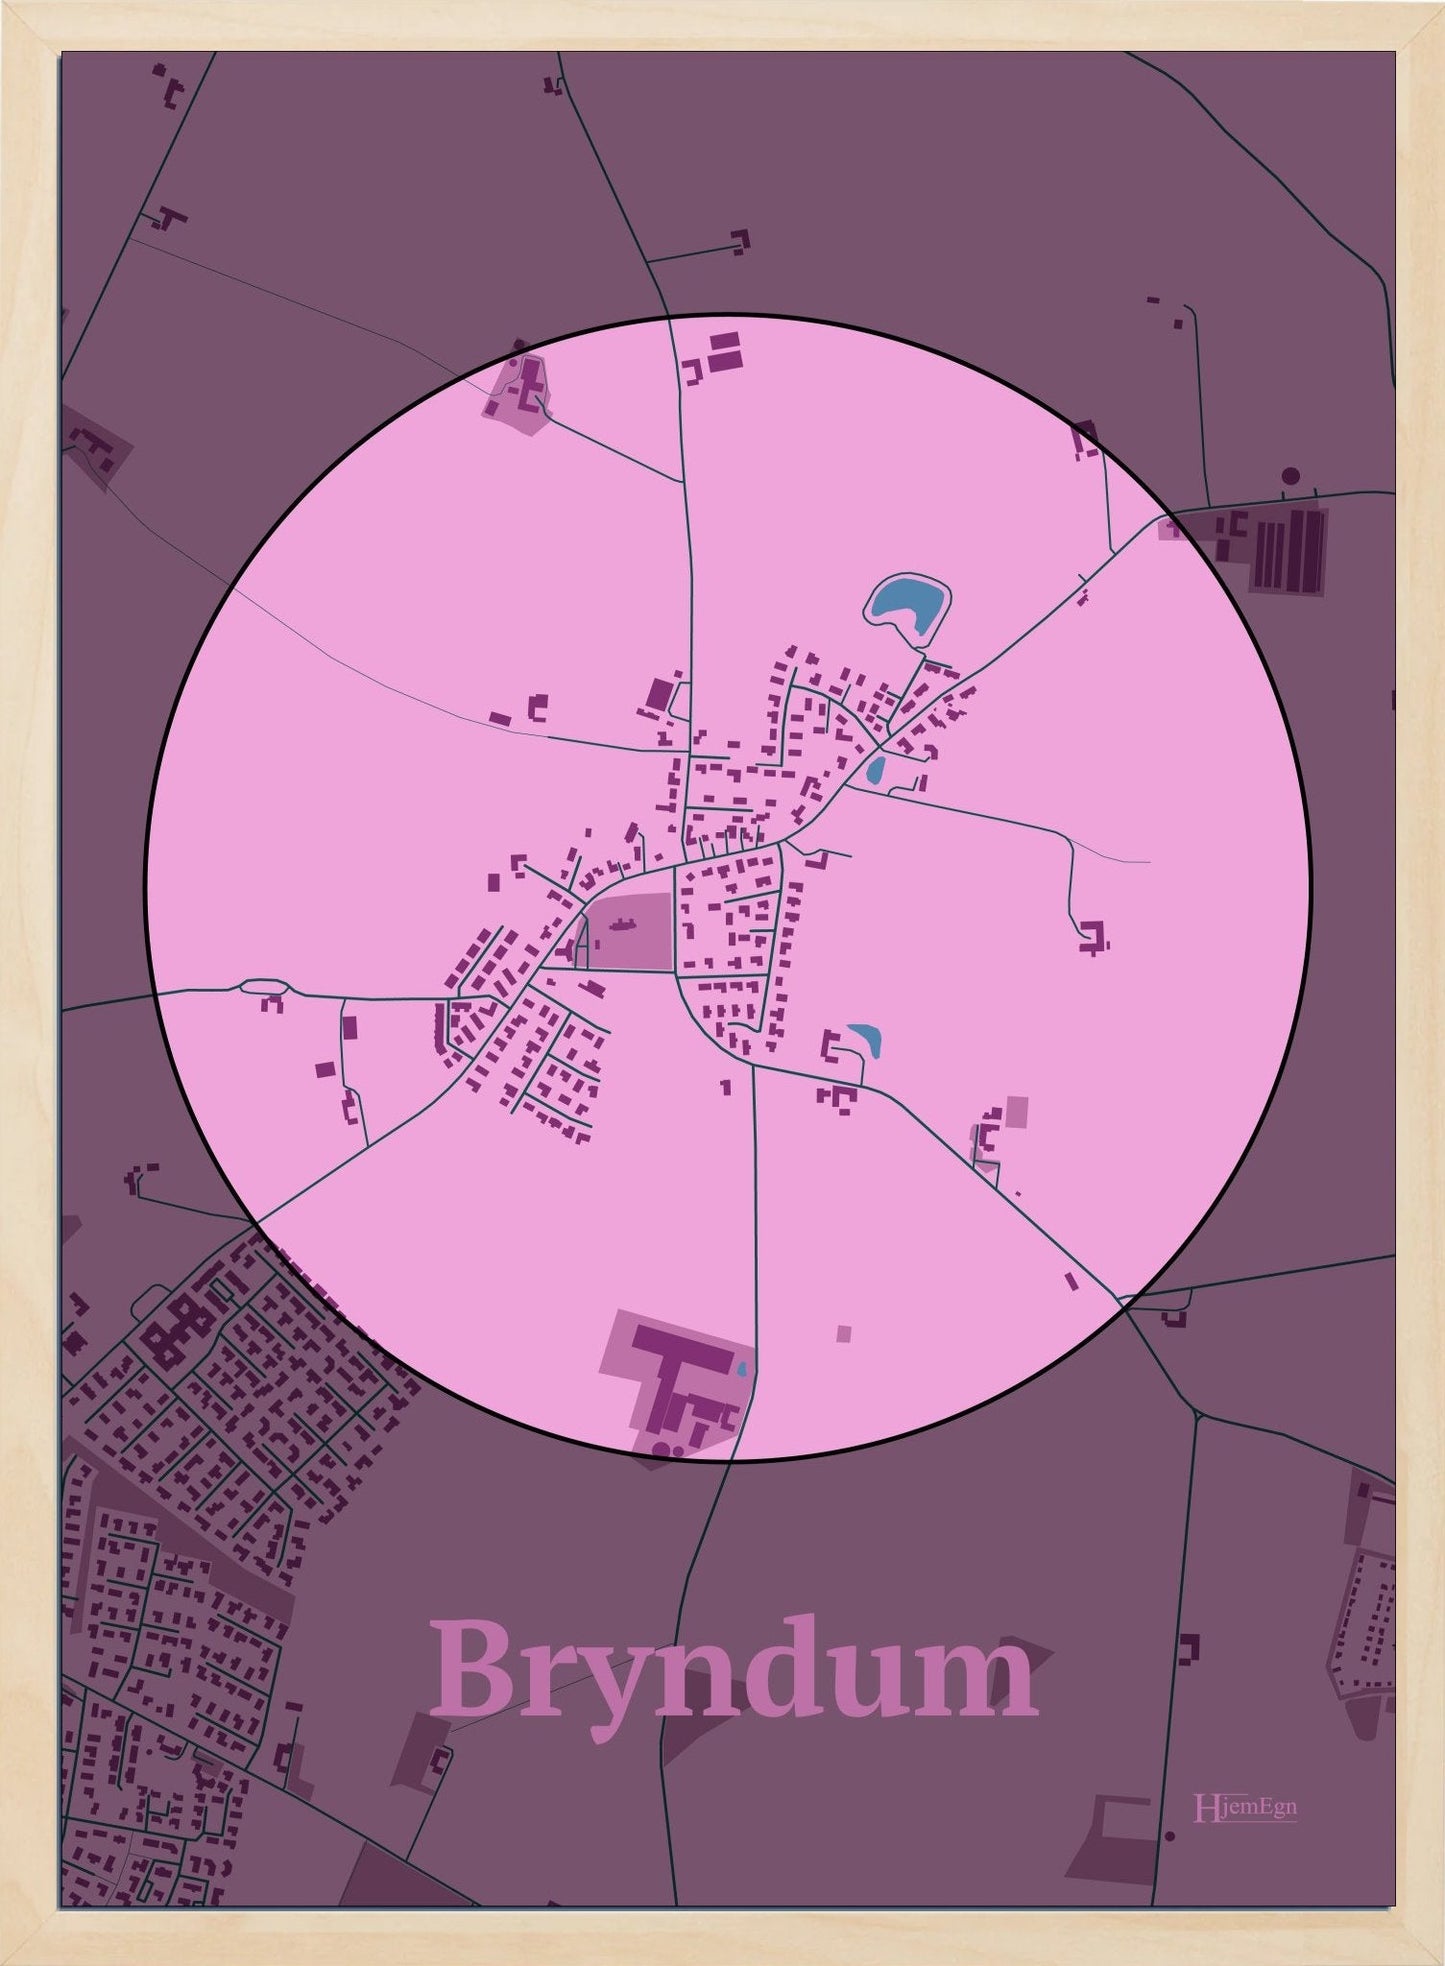 Bryndum plakat i farve pastel rød og HjemEgn.dk design centrum. Design bykort for Bryndum